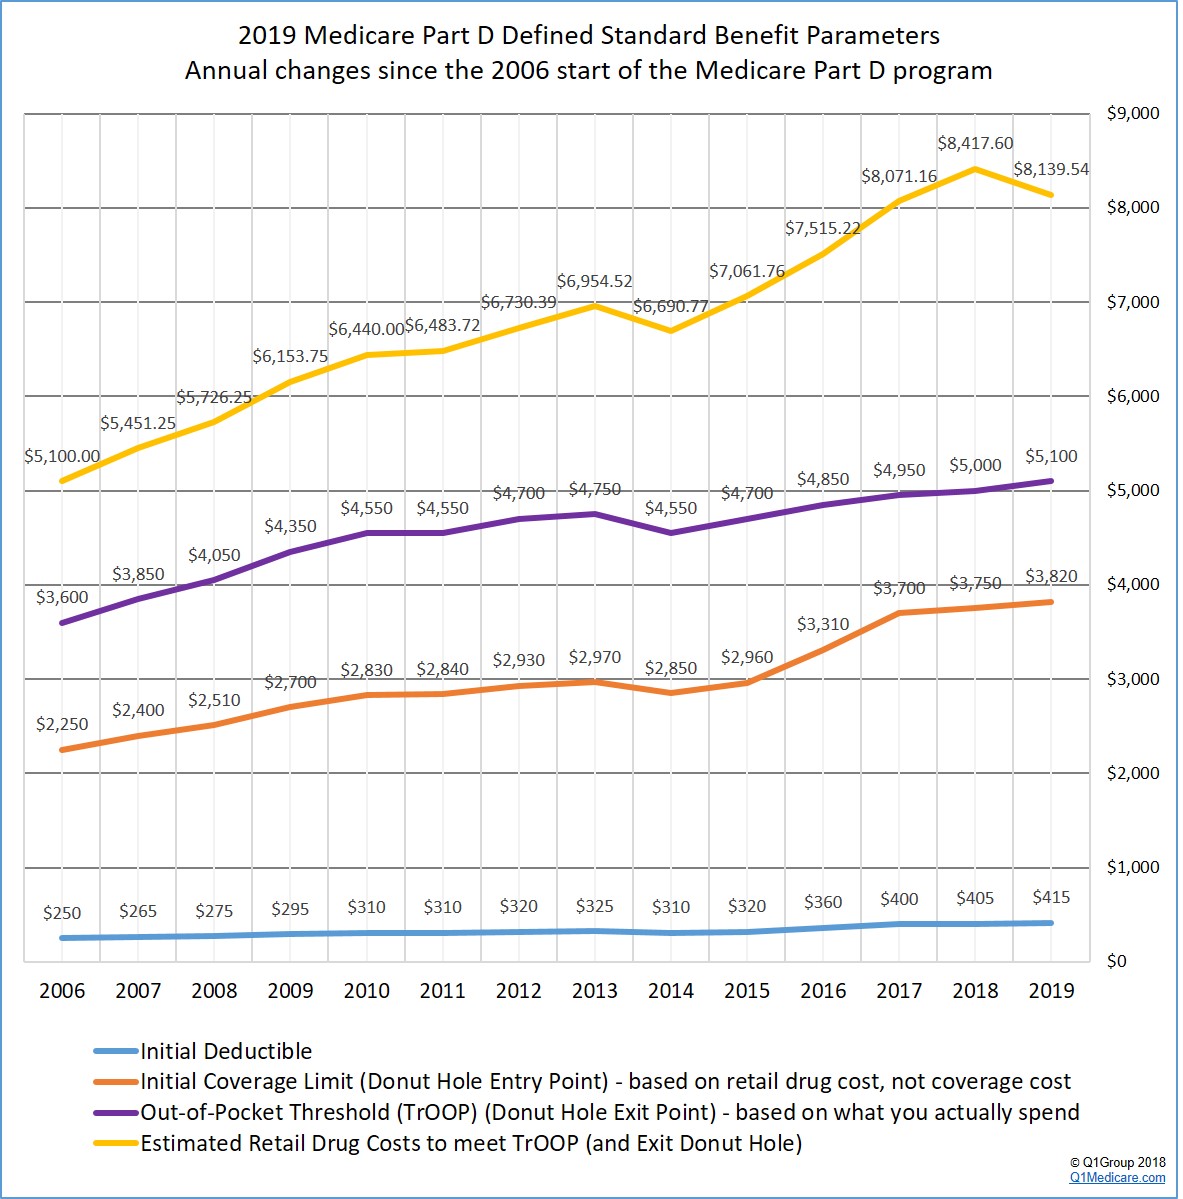 2019 Final Medicare Part D defined standard benefit parameters -- annual changes since 2006